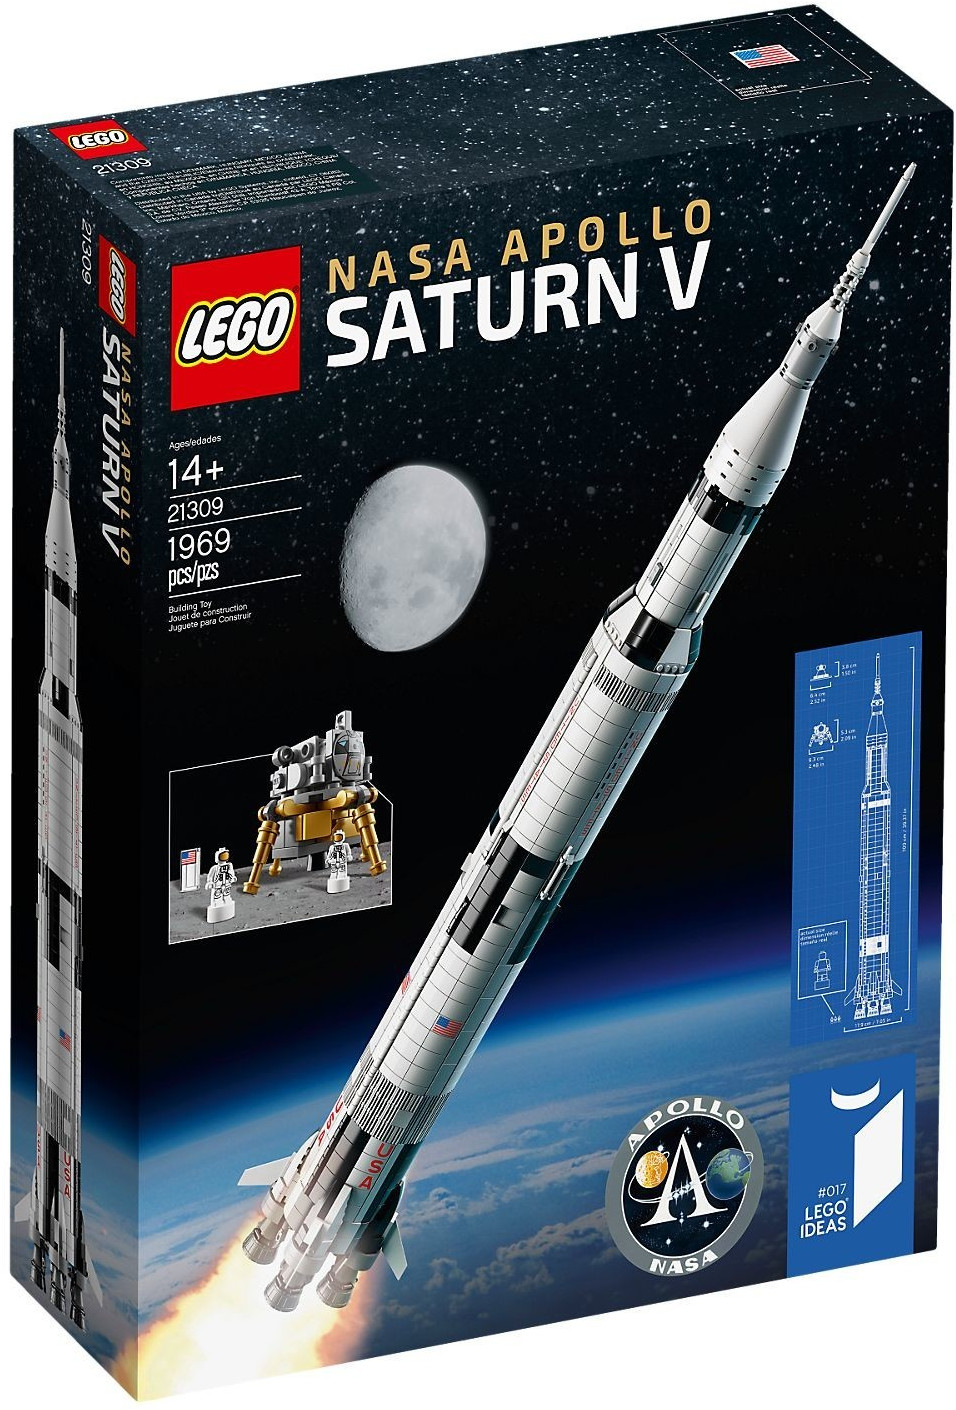 Resmi LEGO 21309 Nasa Apollo Saturn V